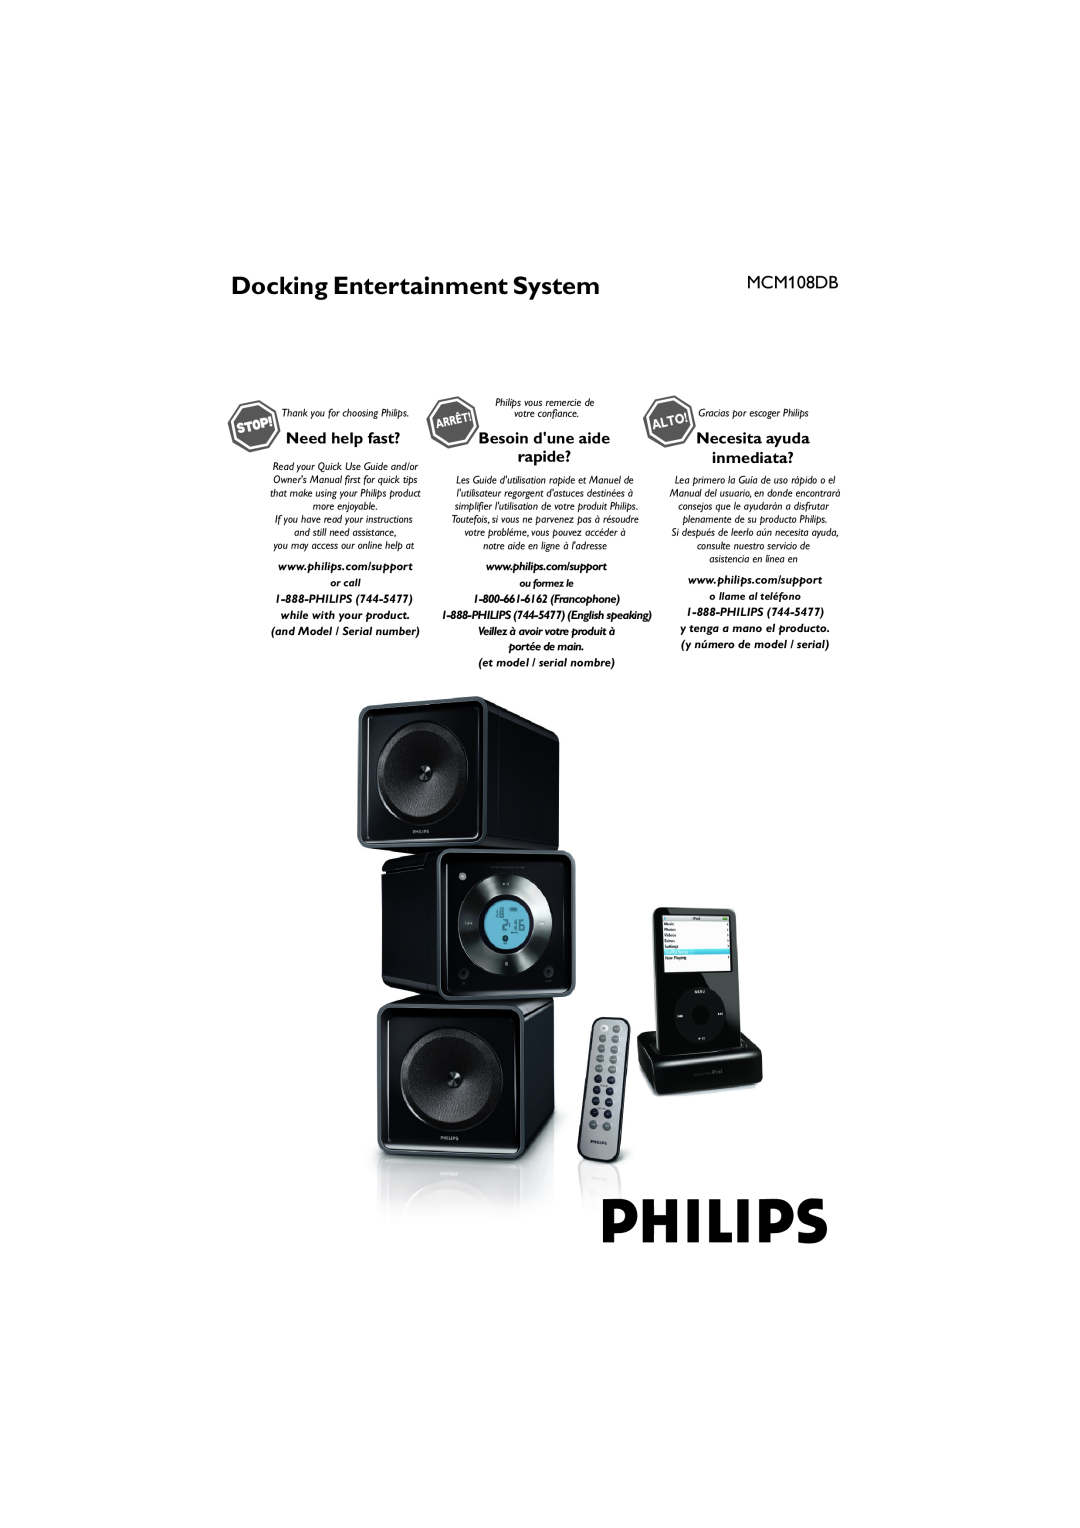 Philips MCM108DB/37 owner manual Docking Entertainment System, Necesita ayuda inmediata?, Need help fast?, rapide? 